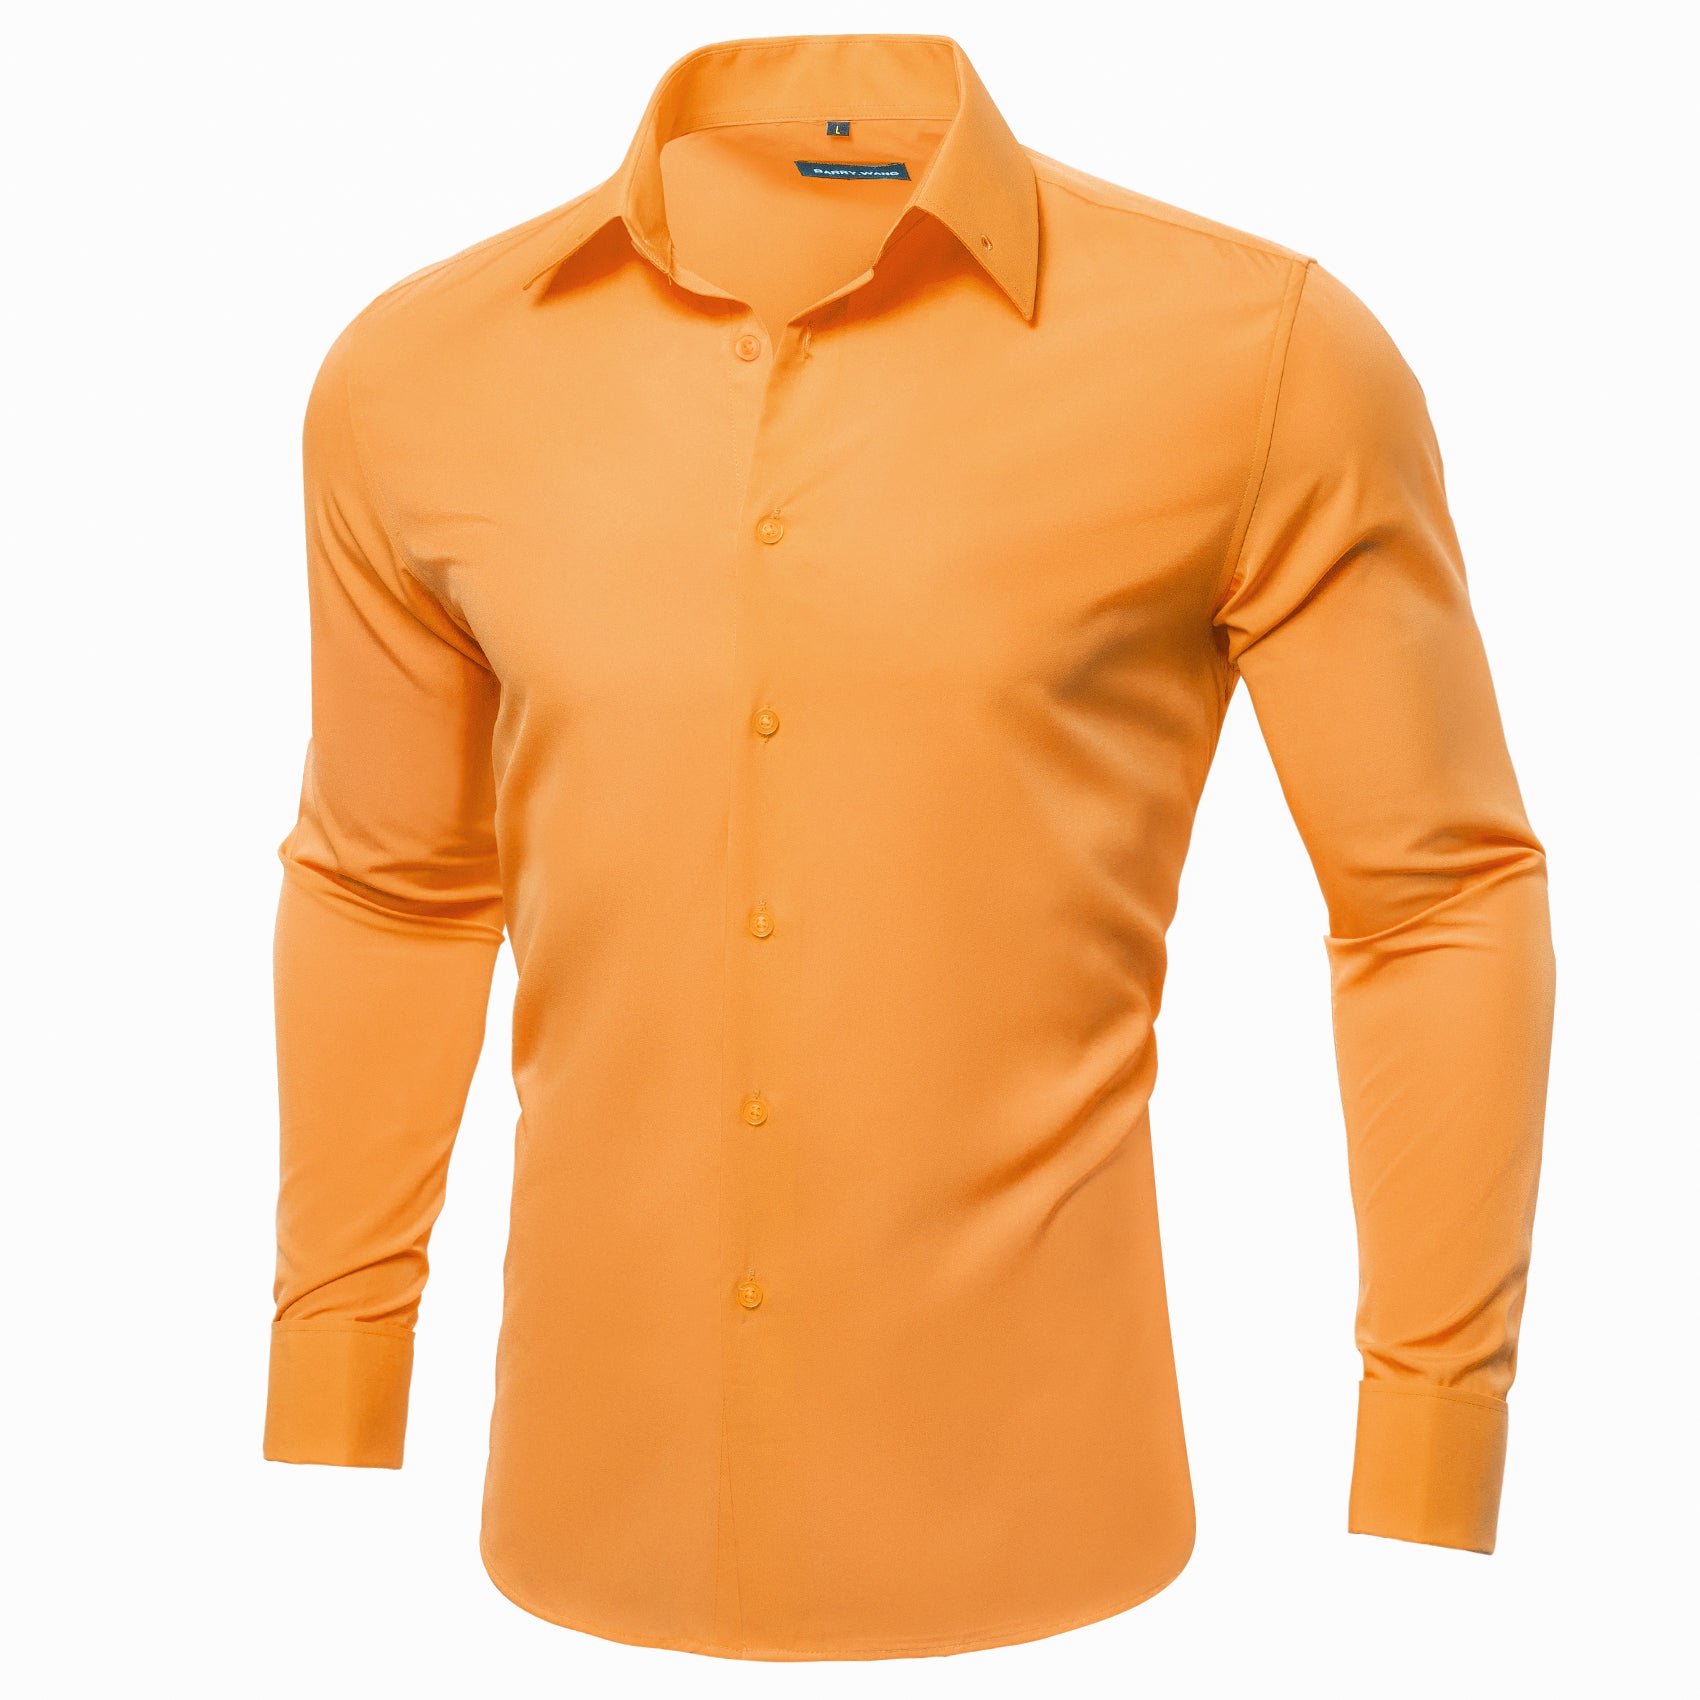 Barry.wang Dark Orange Solid Silk Shirt